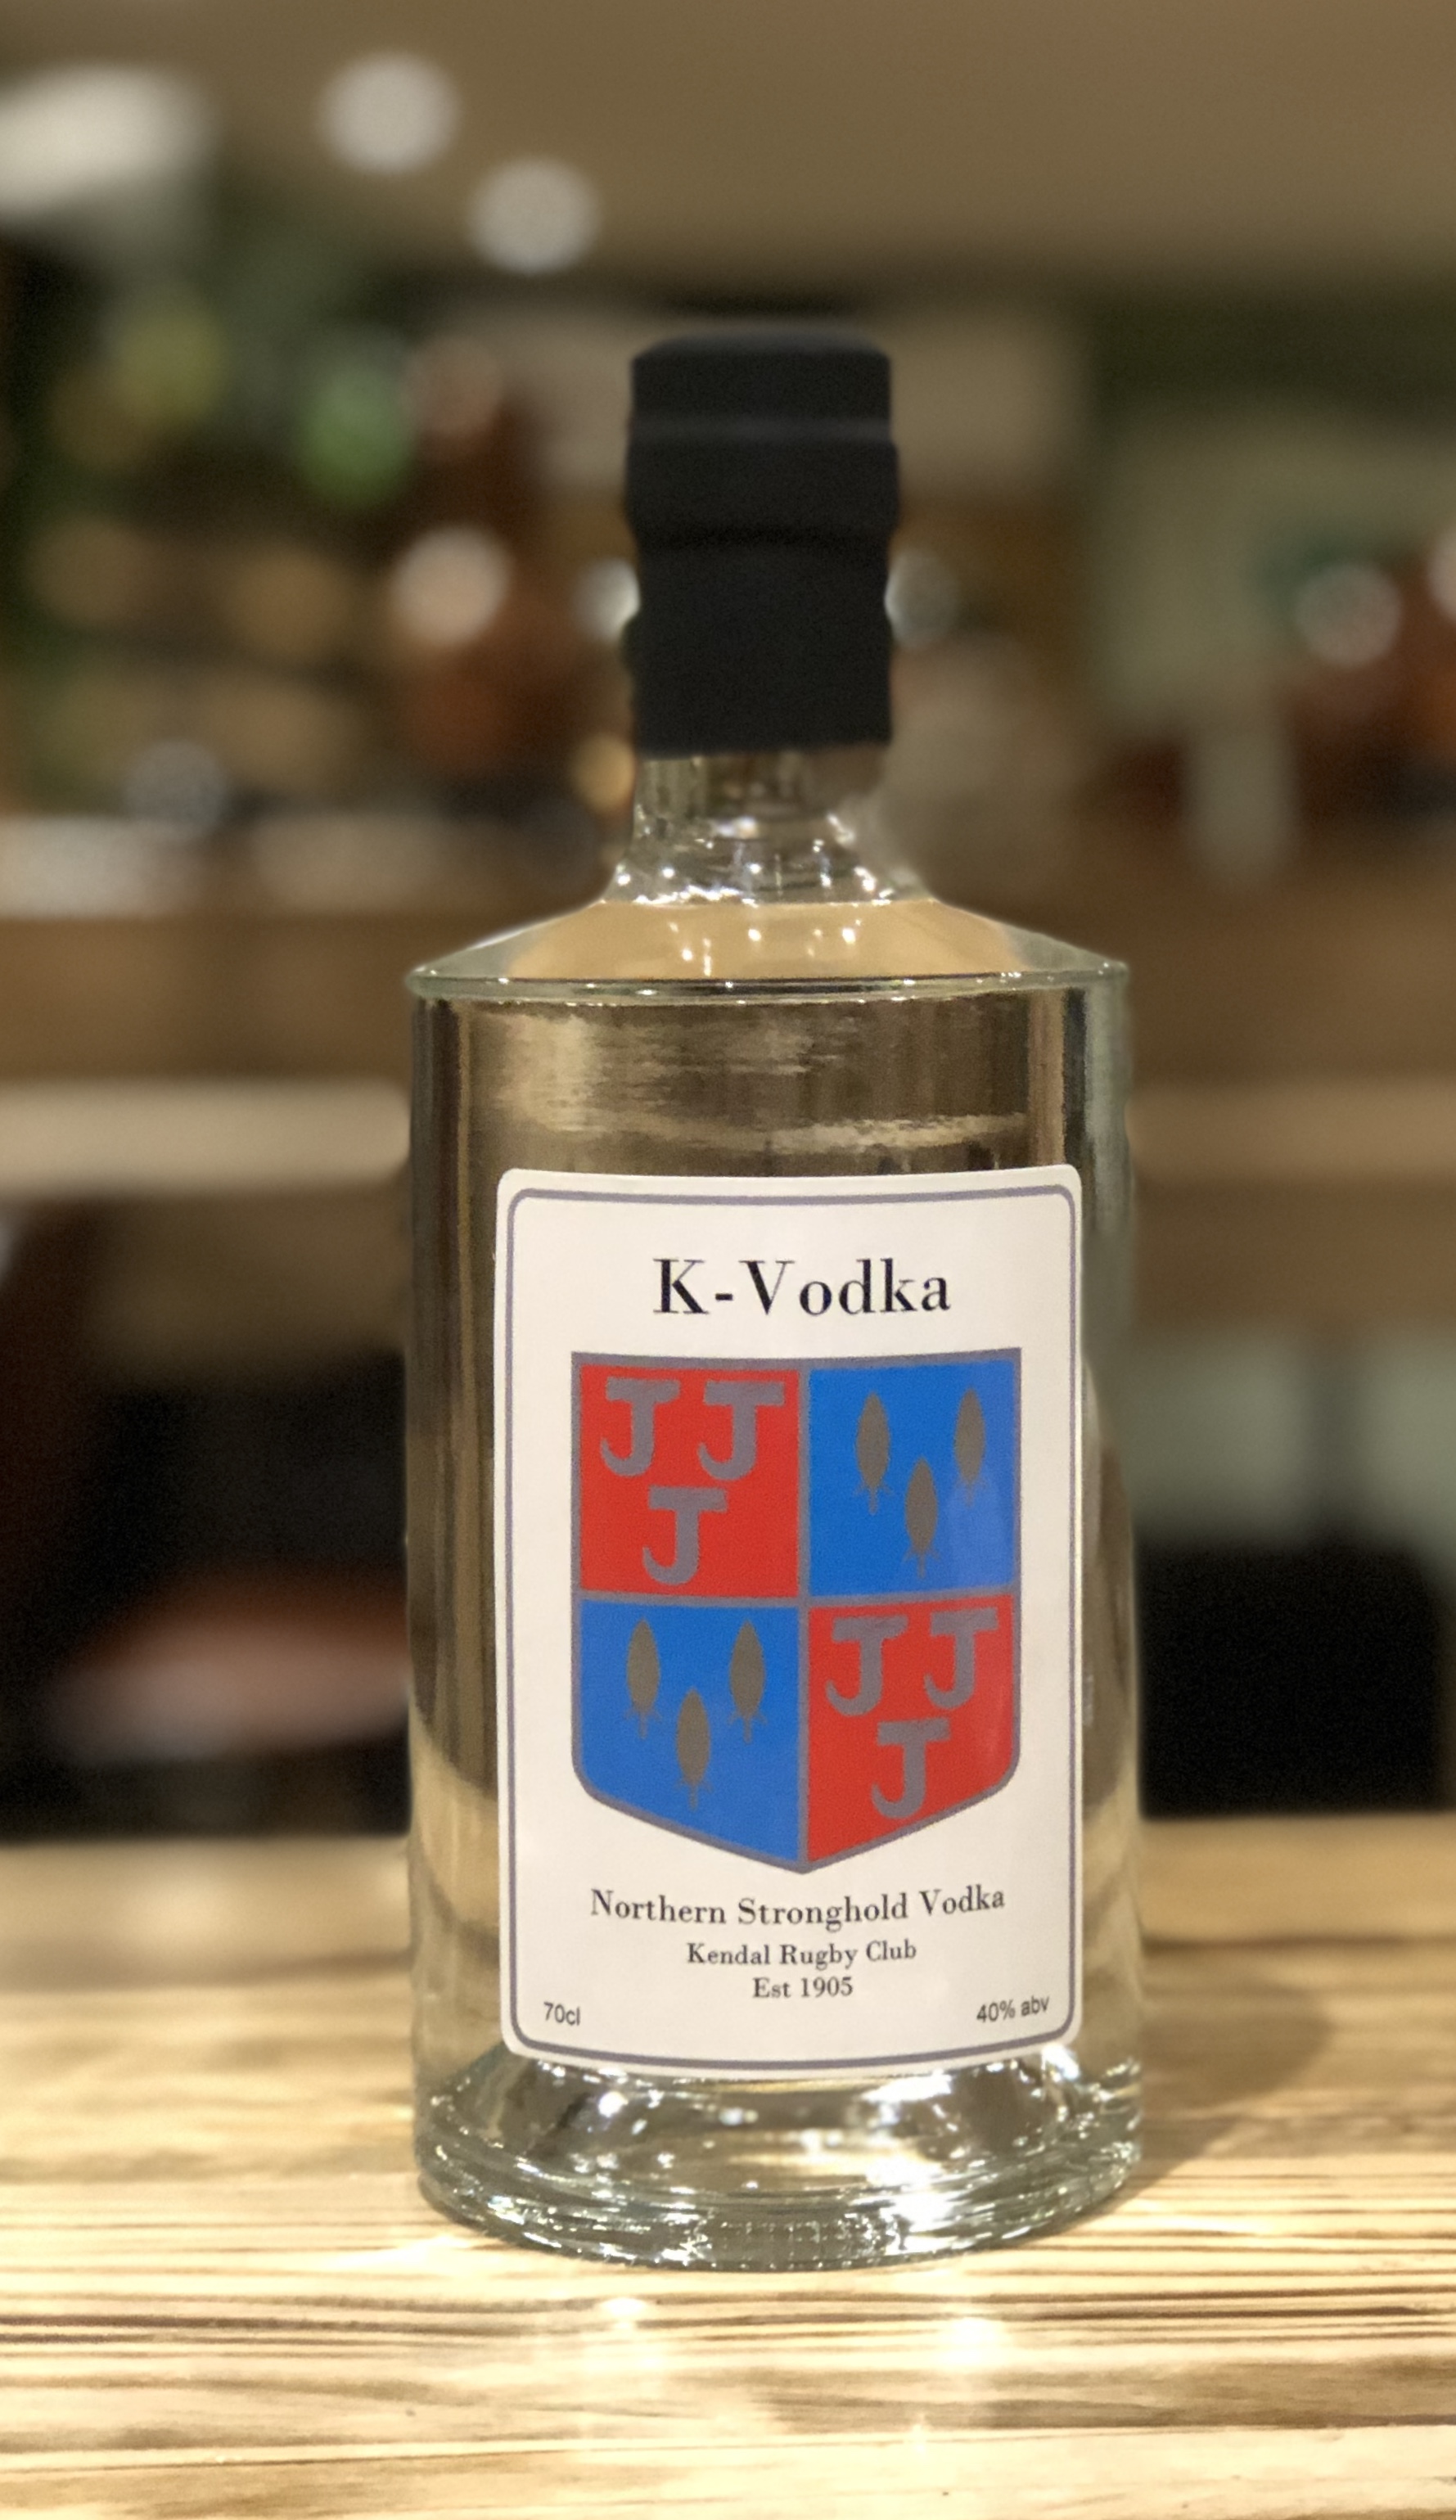 K-Vodka - Kendal Rugby Club